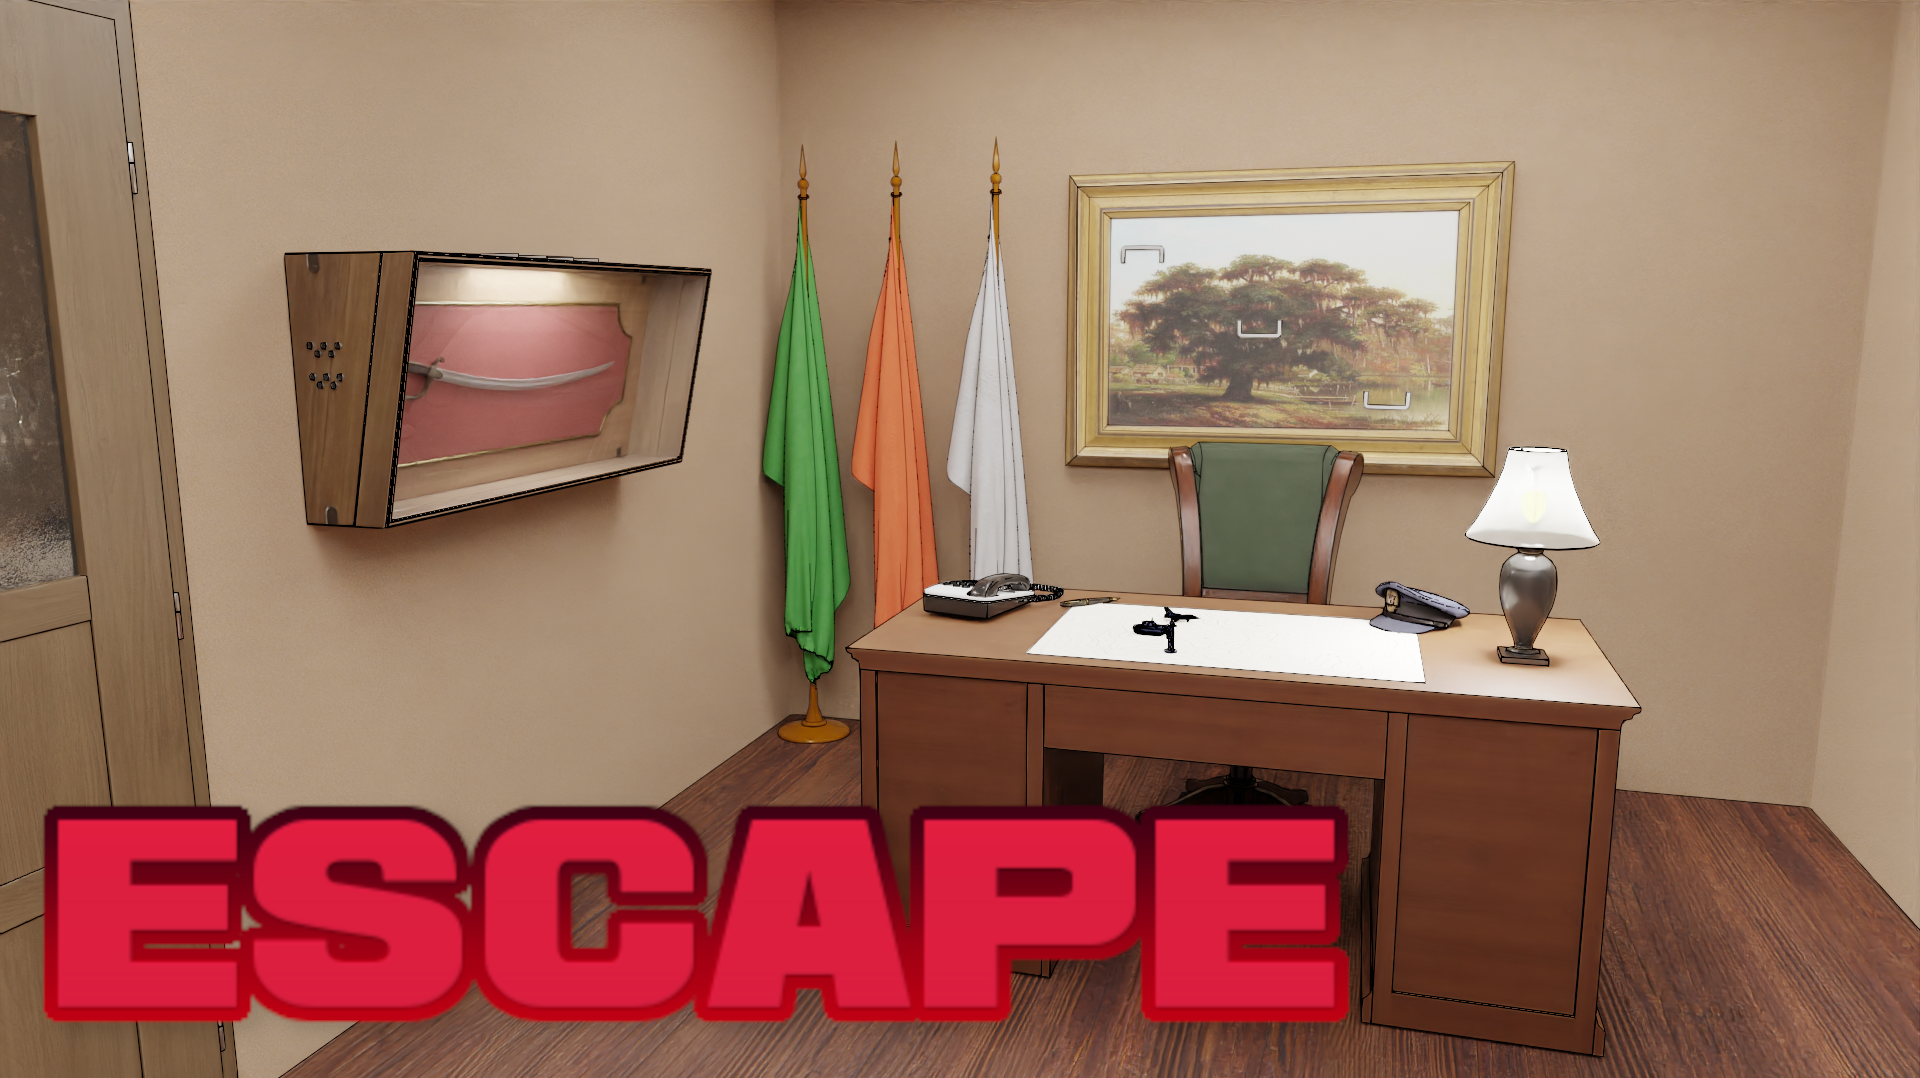 Escape or Die 3 Game Image